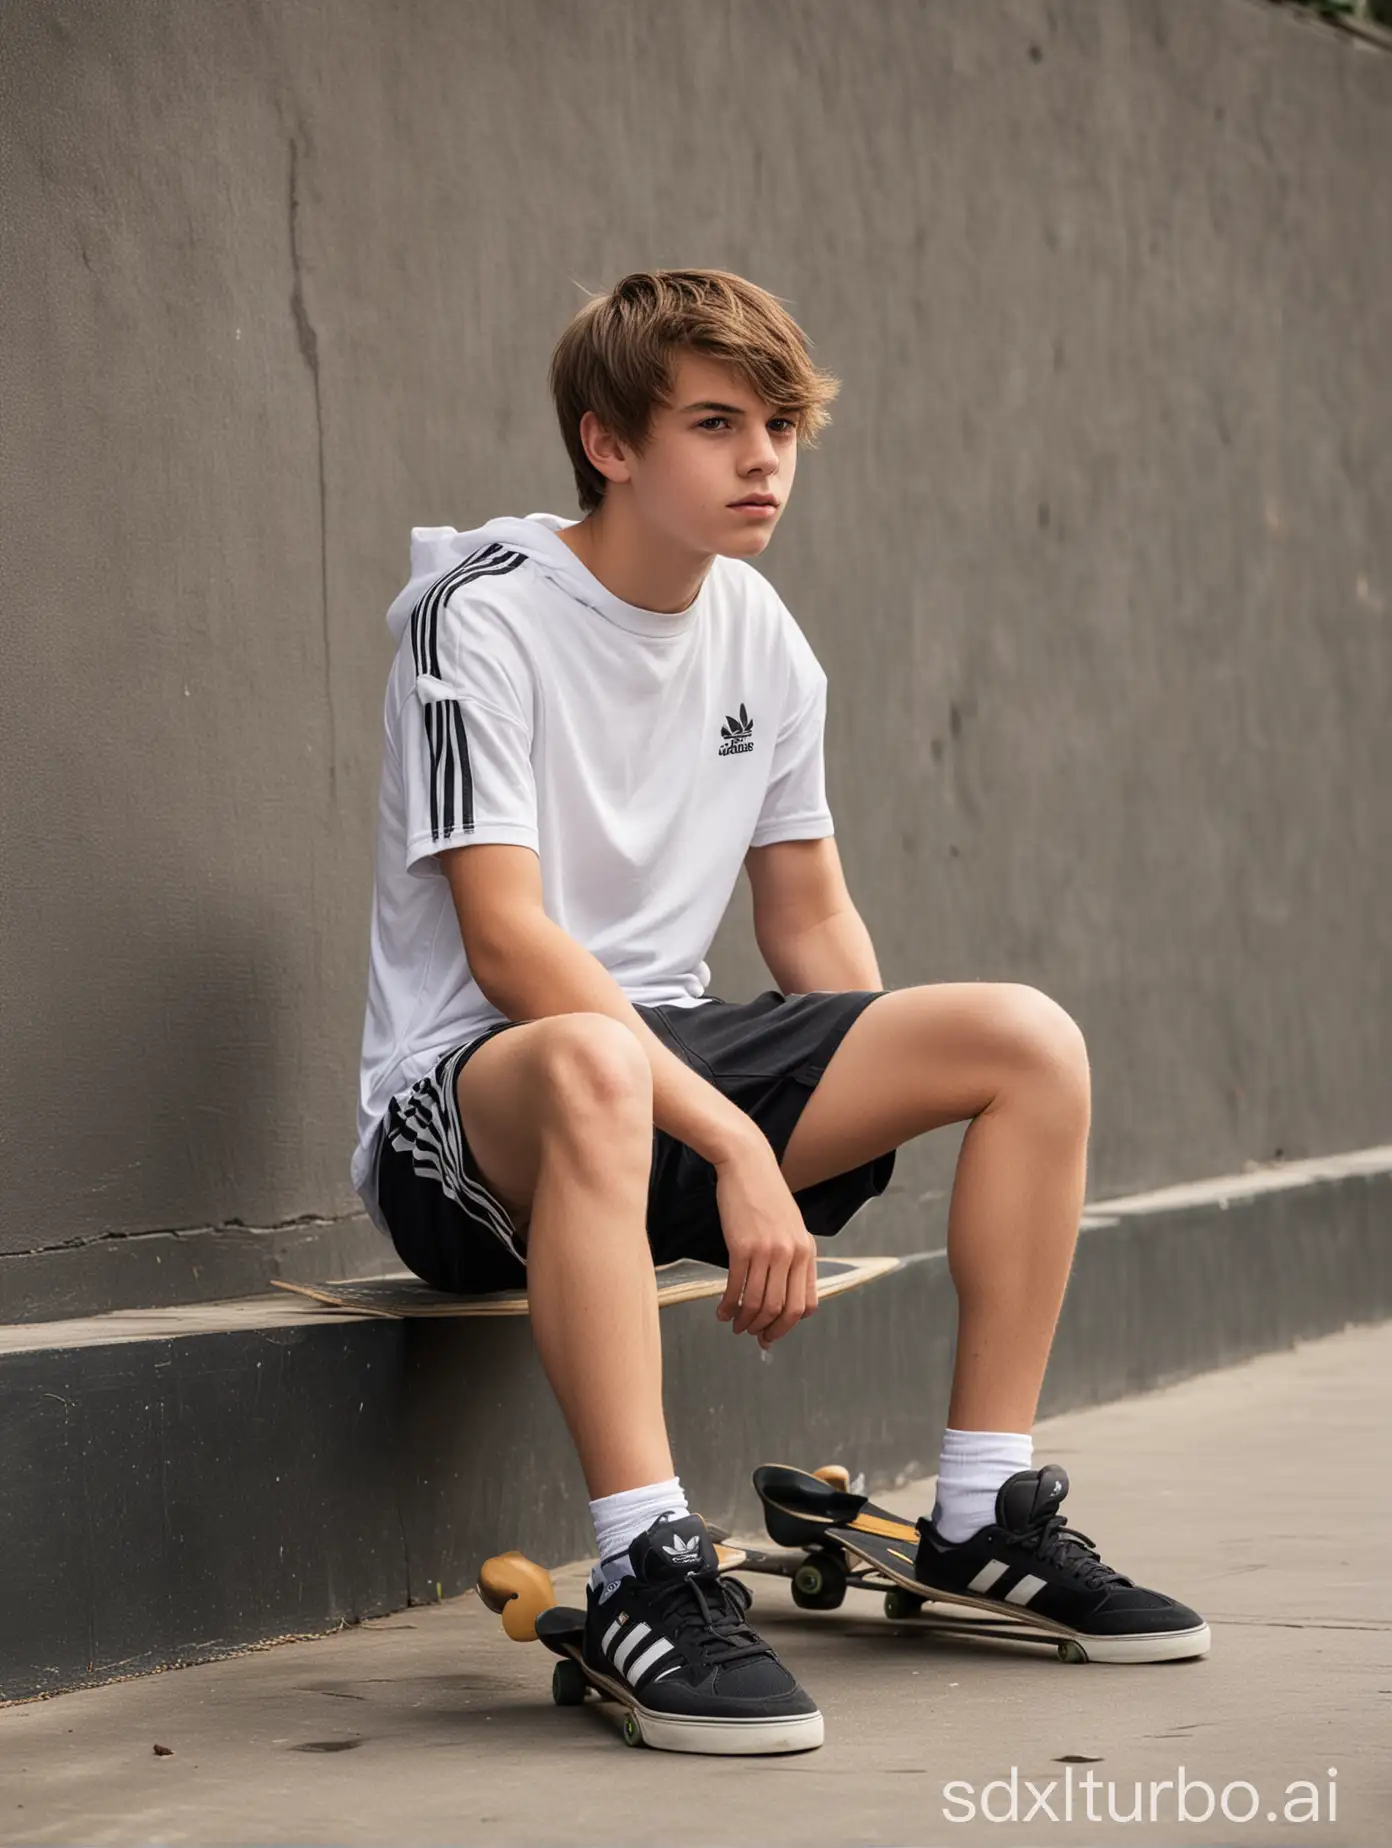 Adidas-Shorts-Teen-Skateboarding